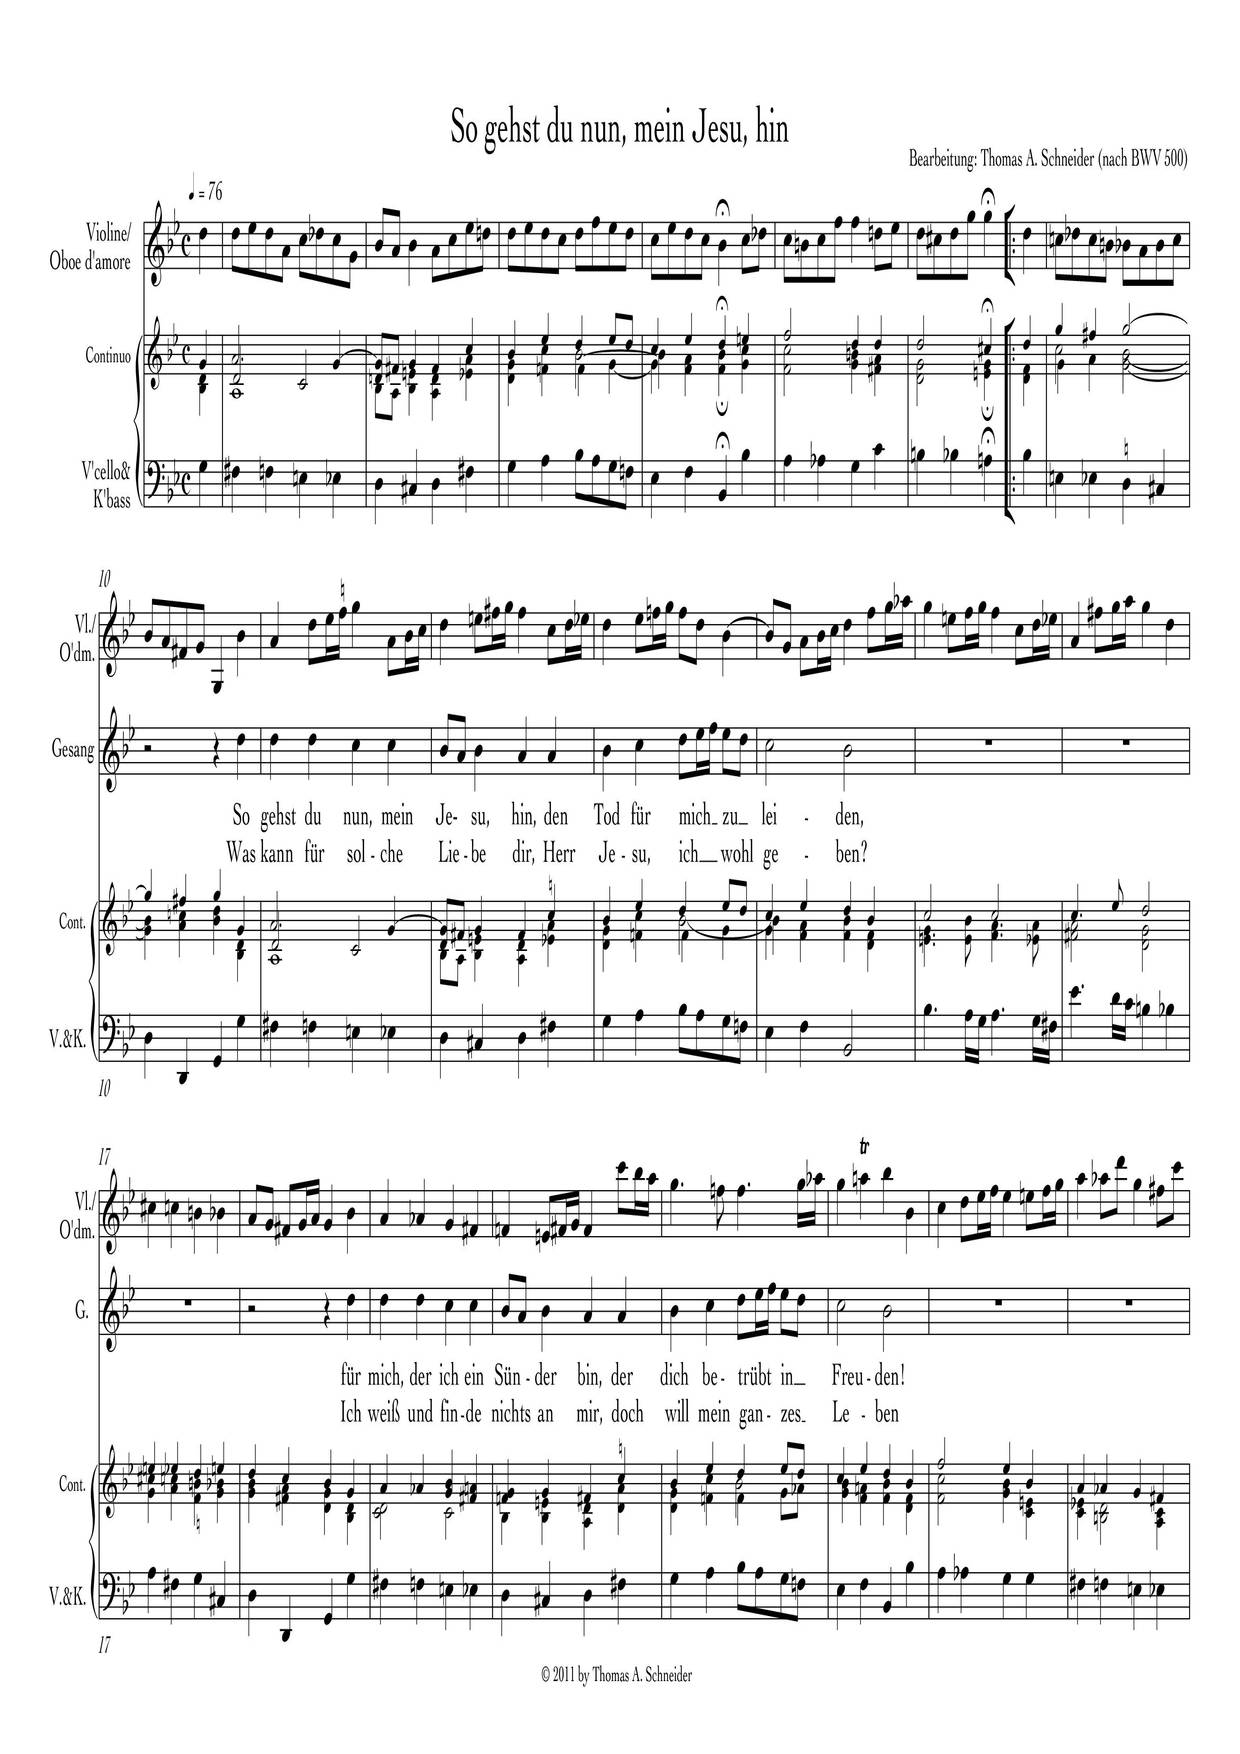 So Gehst Du Nun, Mein Jesu, Hin, BWV 500 Score